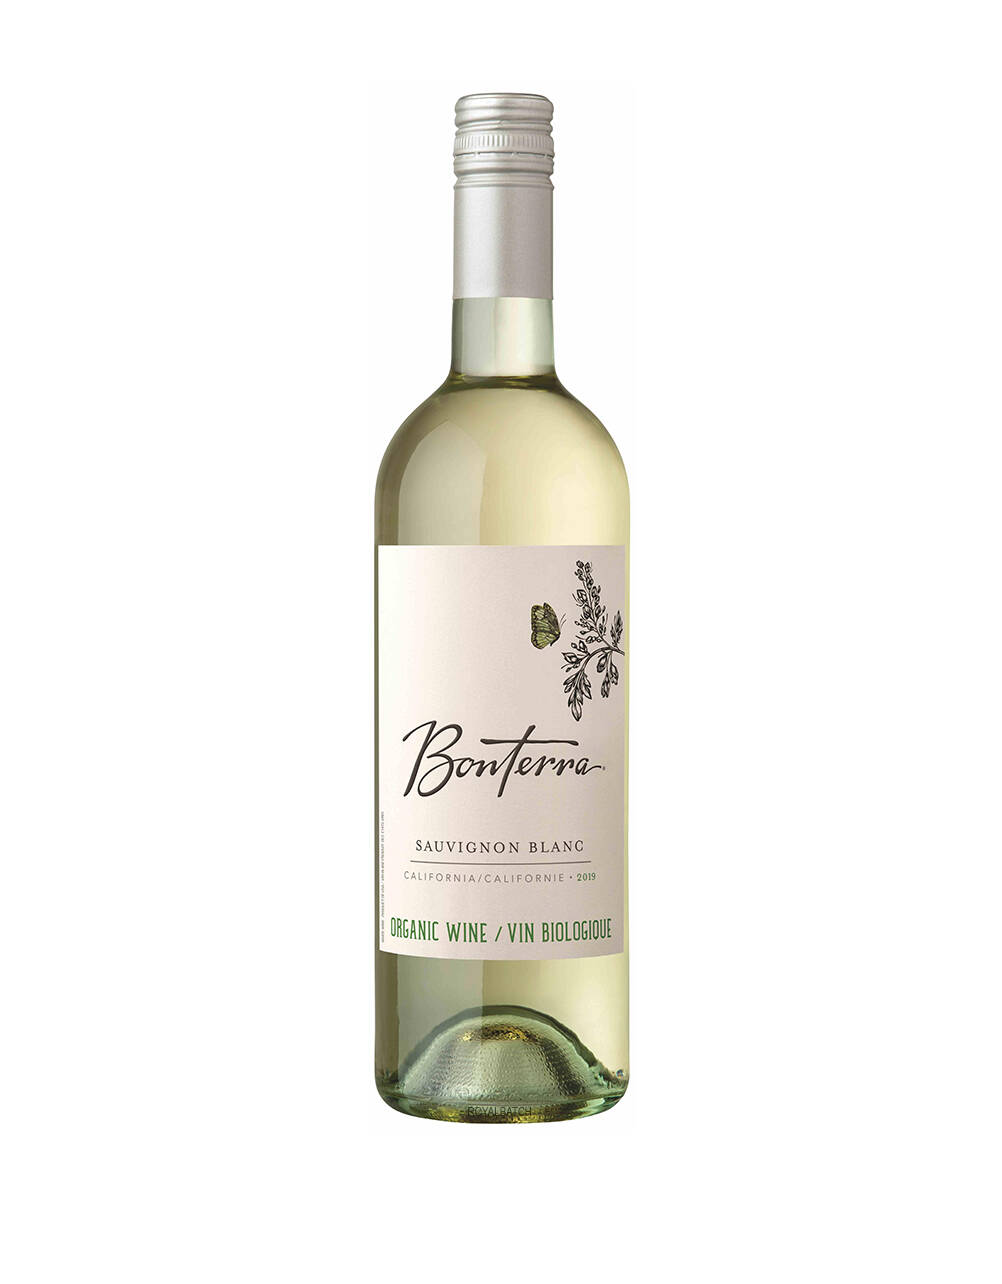 Bonterra Sauvignon Blanc Organic Wine